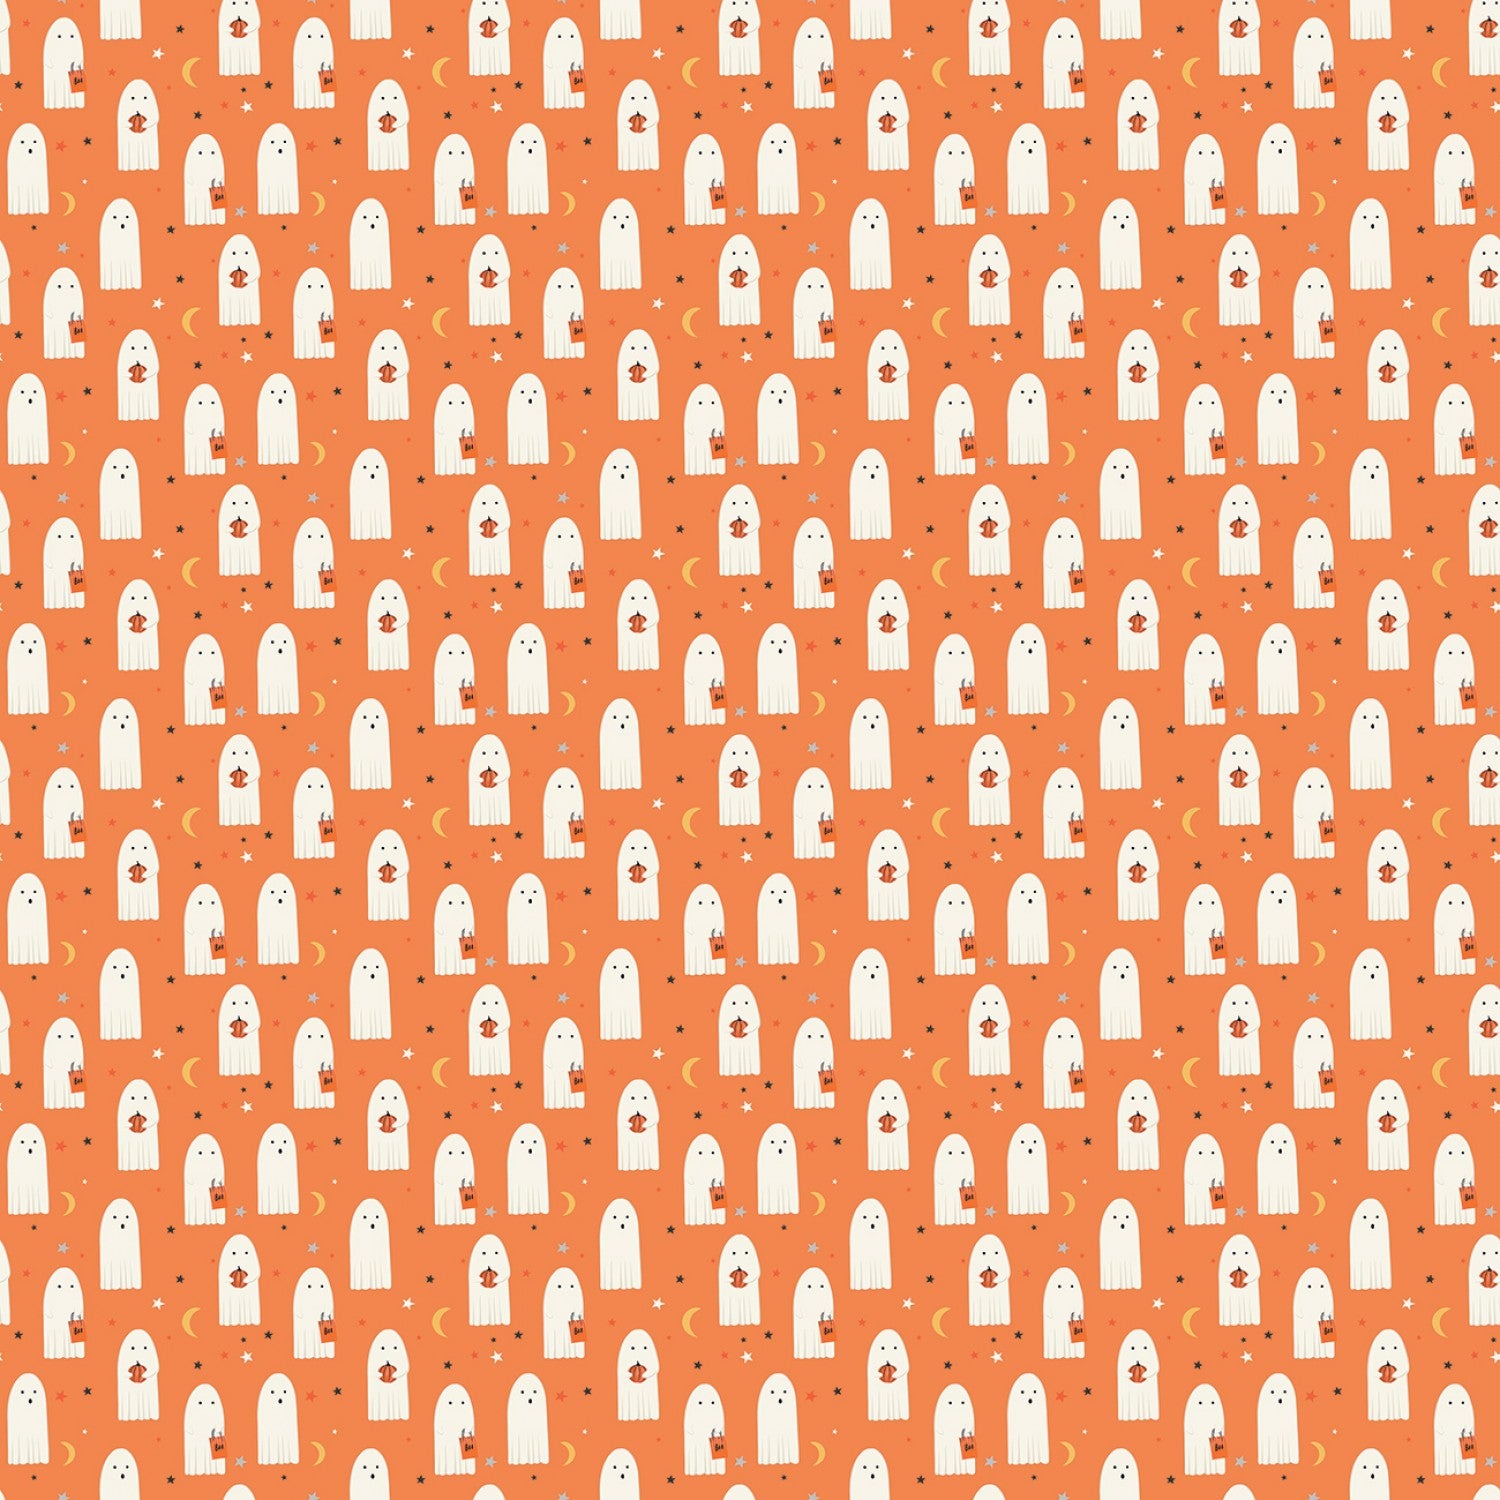 Fabric, Halloween Hey Bootiful Sheet Ghosts Orange C13132R-Orange